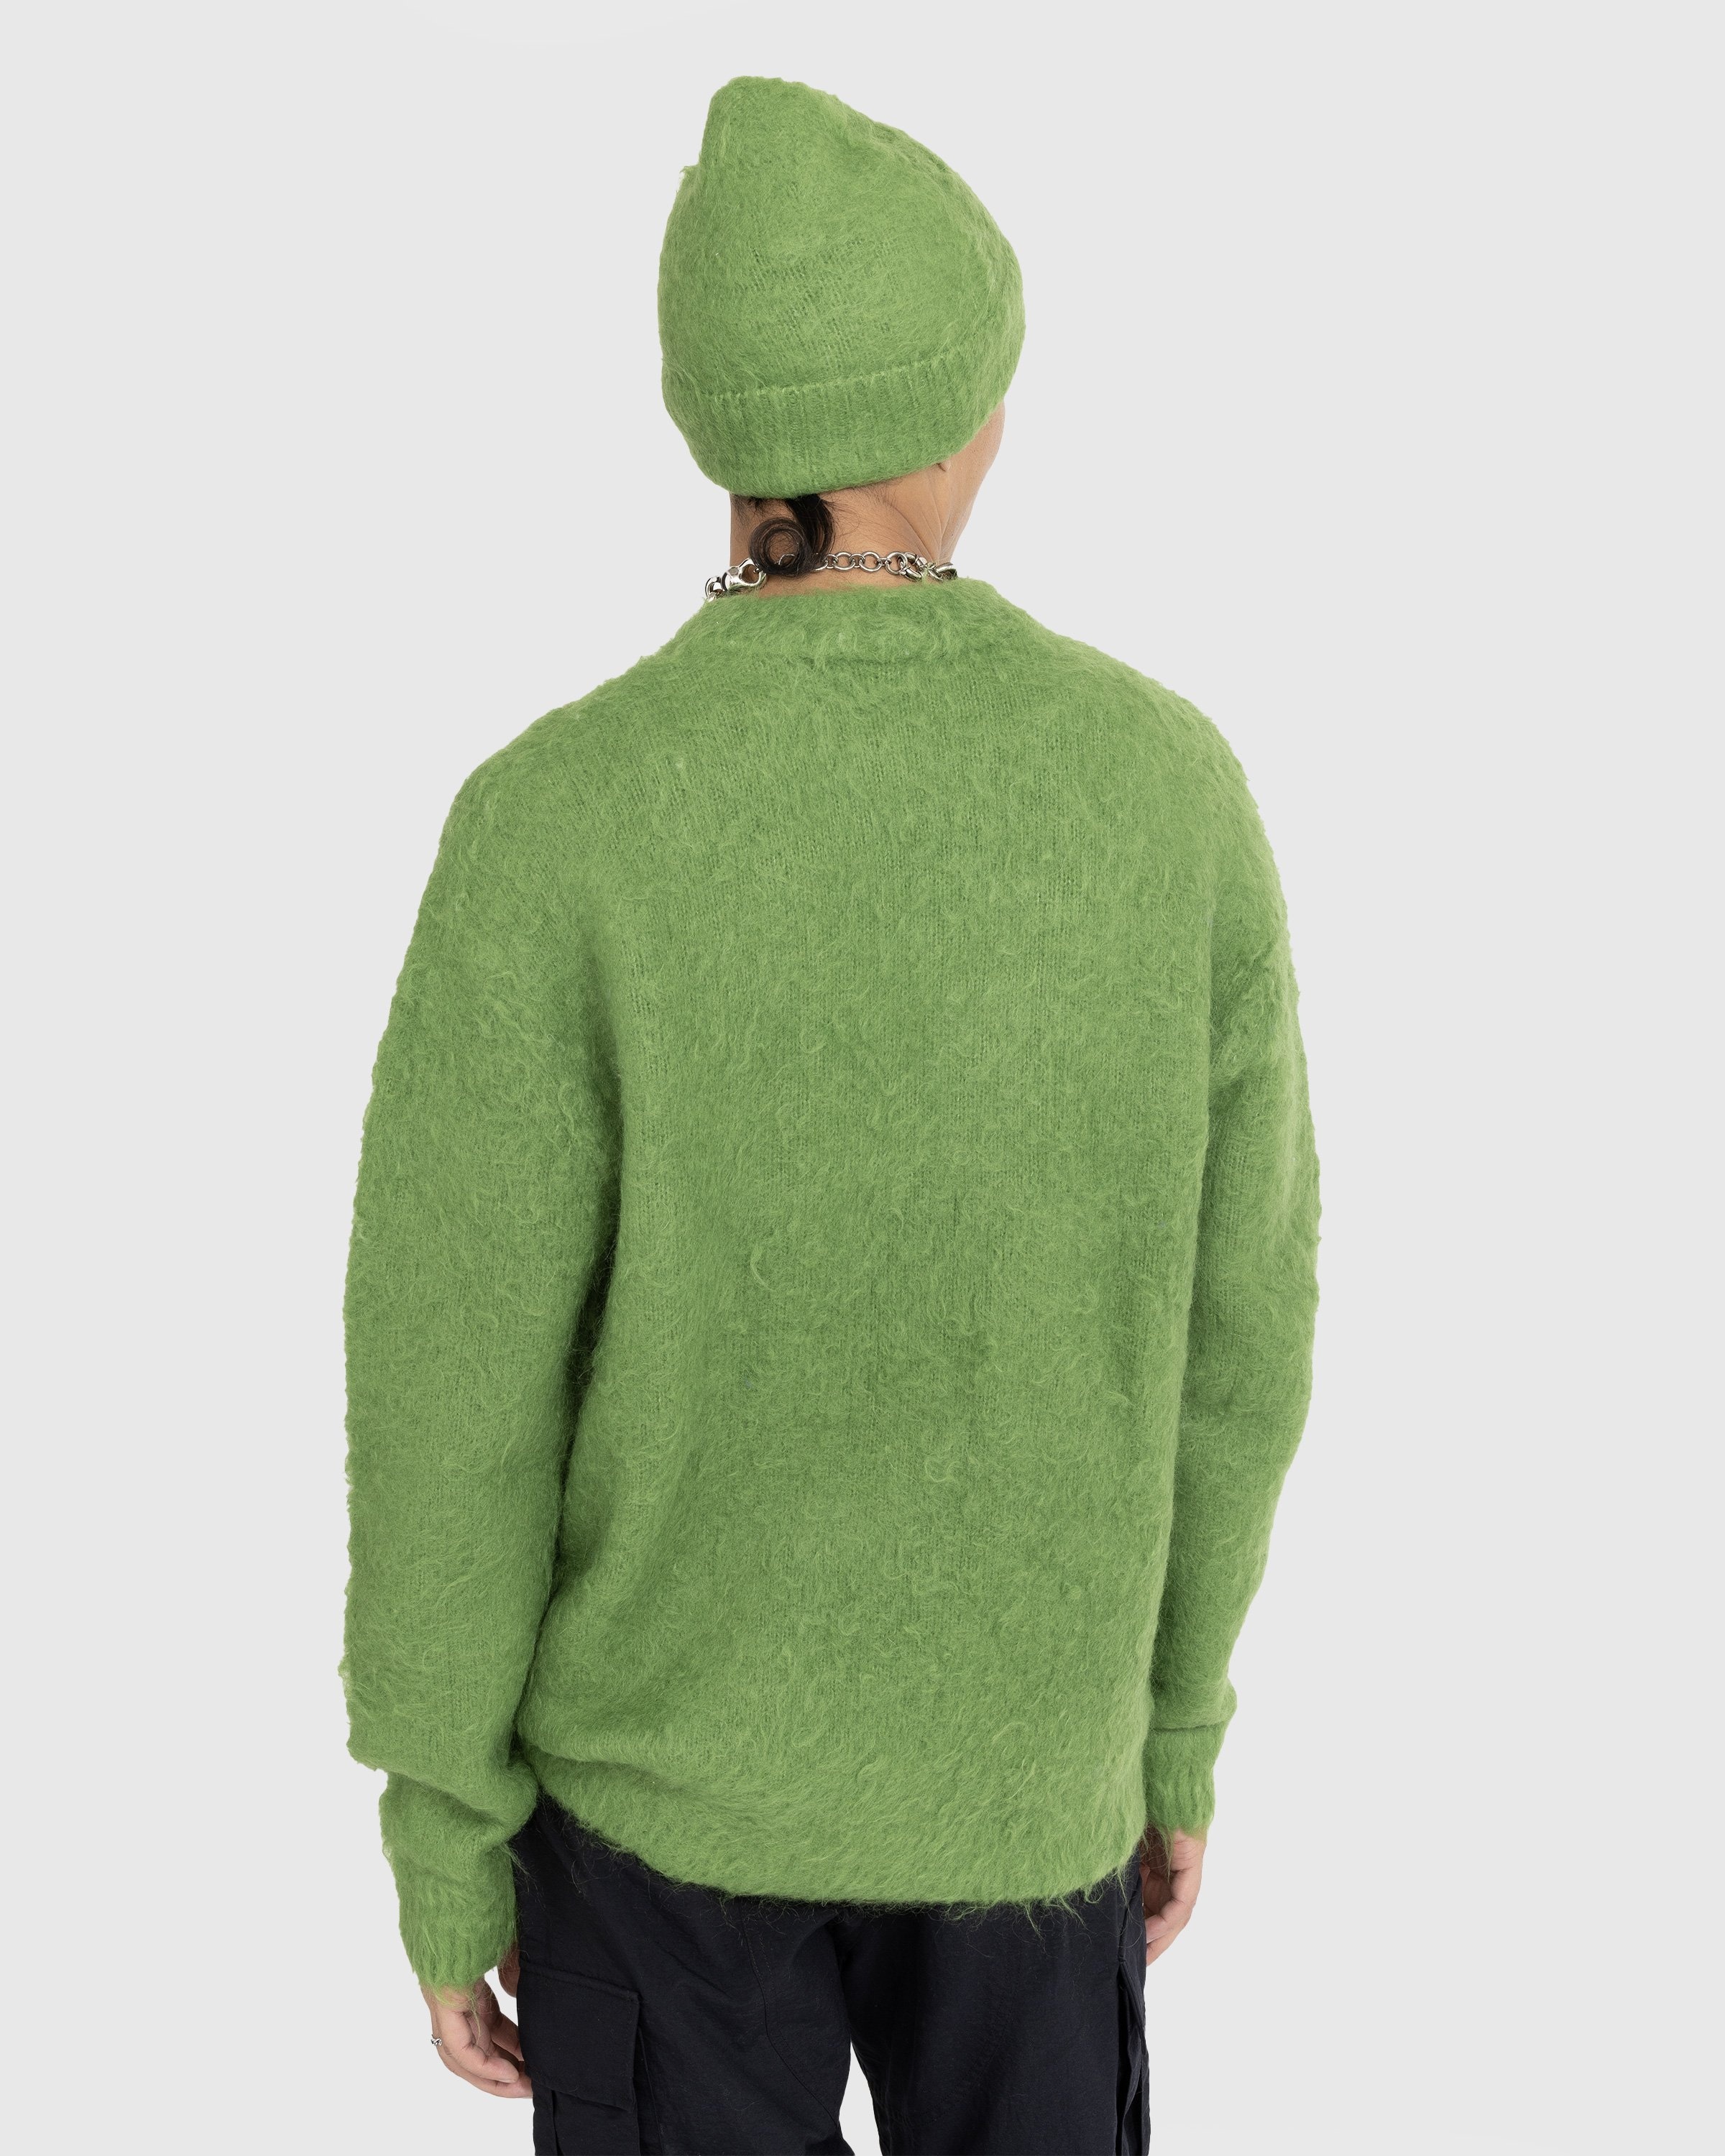 Acne Studios – Hair Crewneck Sweater Pear Green - Knitwear - Green - Image 3